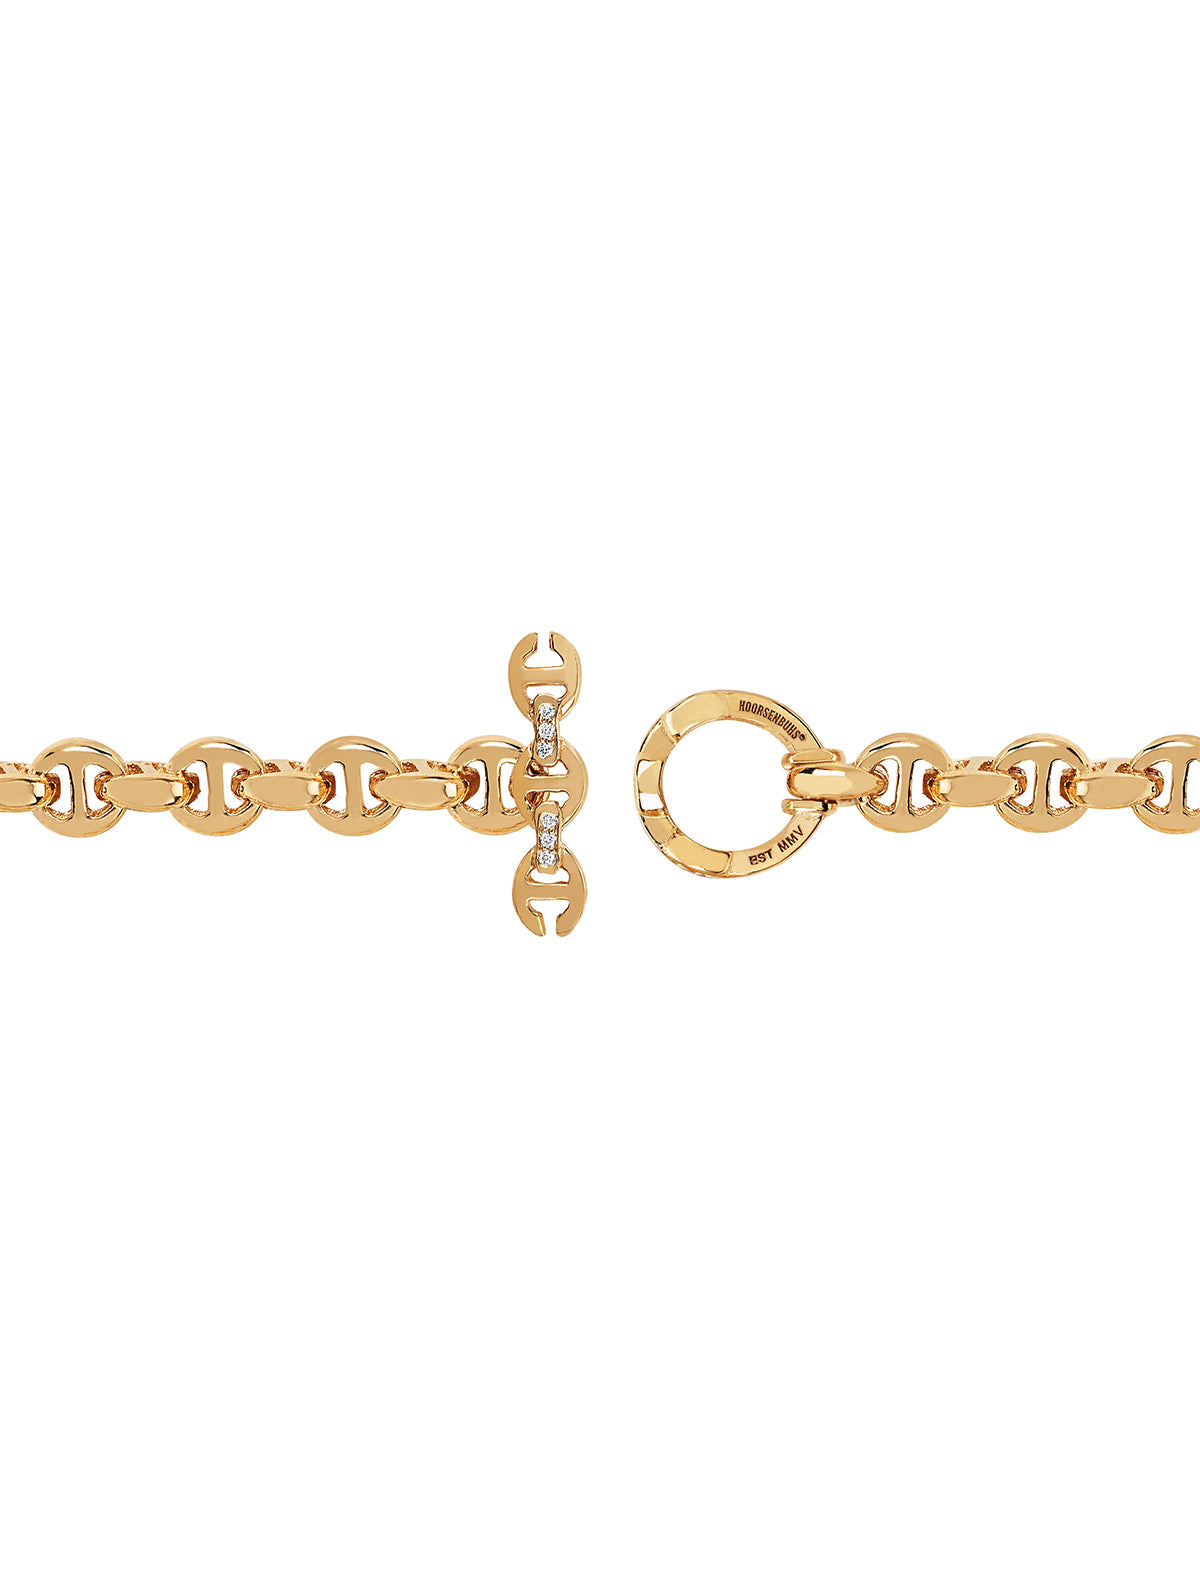 HOORSENBUHS 5mm Open-Link™ Necklace with Diamond Pendant 18k Yellow Gold